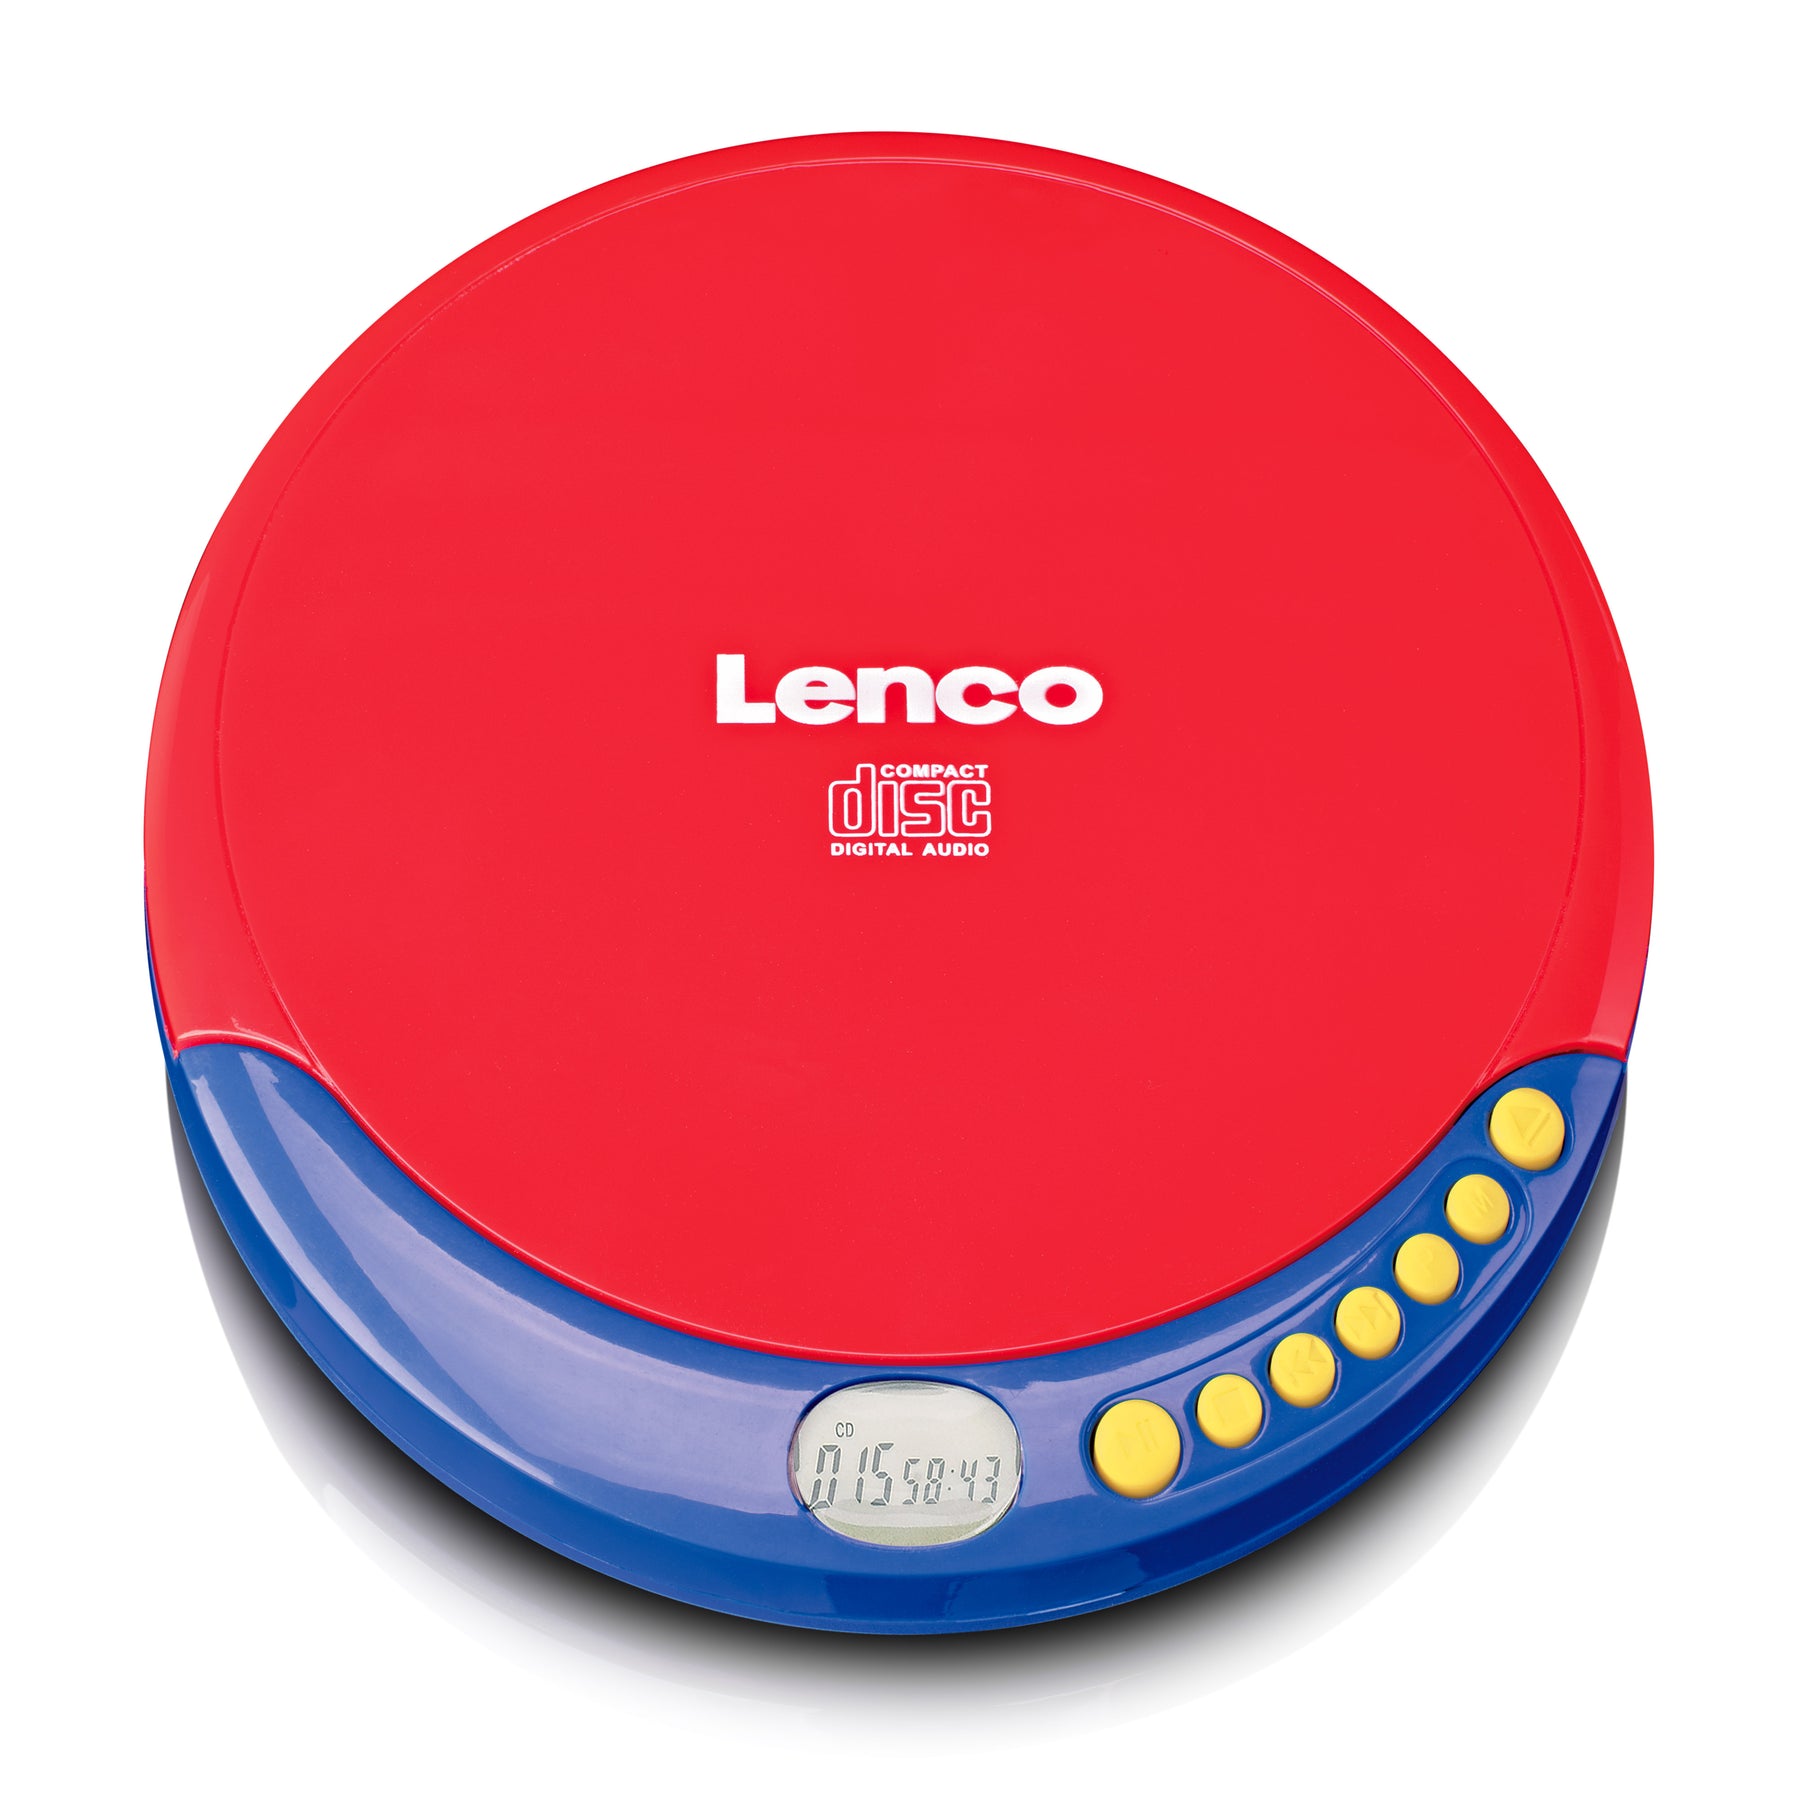 Offizieller Lenco.de Webshop Lenco – Lenco Webshop - | Jetzt offiziellen kaufen? im CD-021KIDS